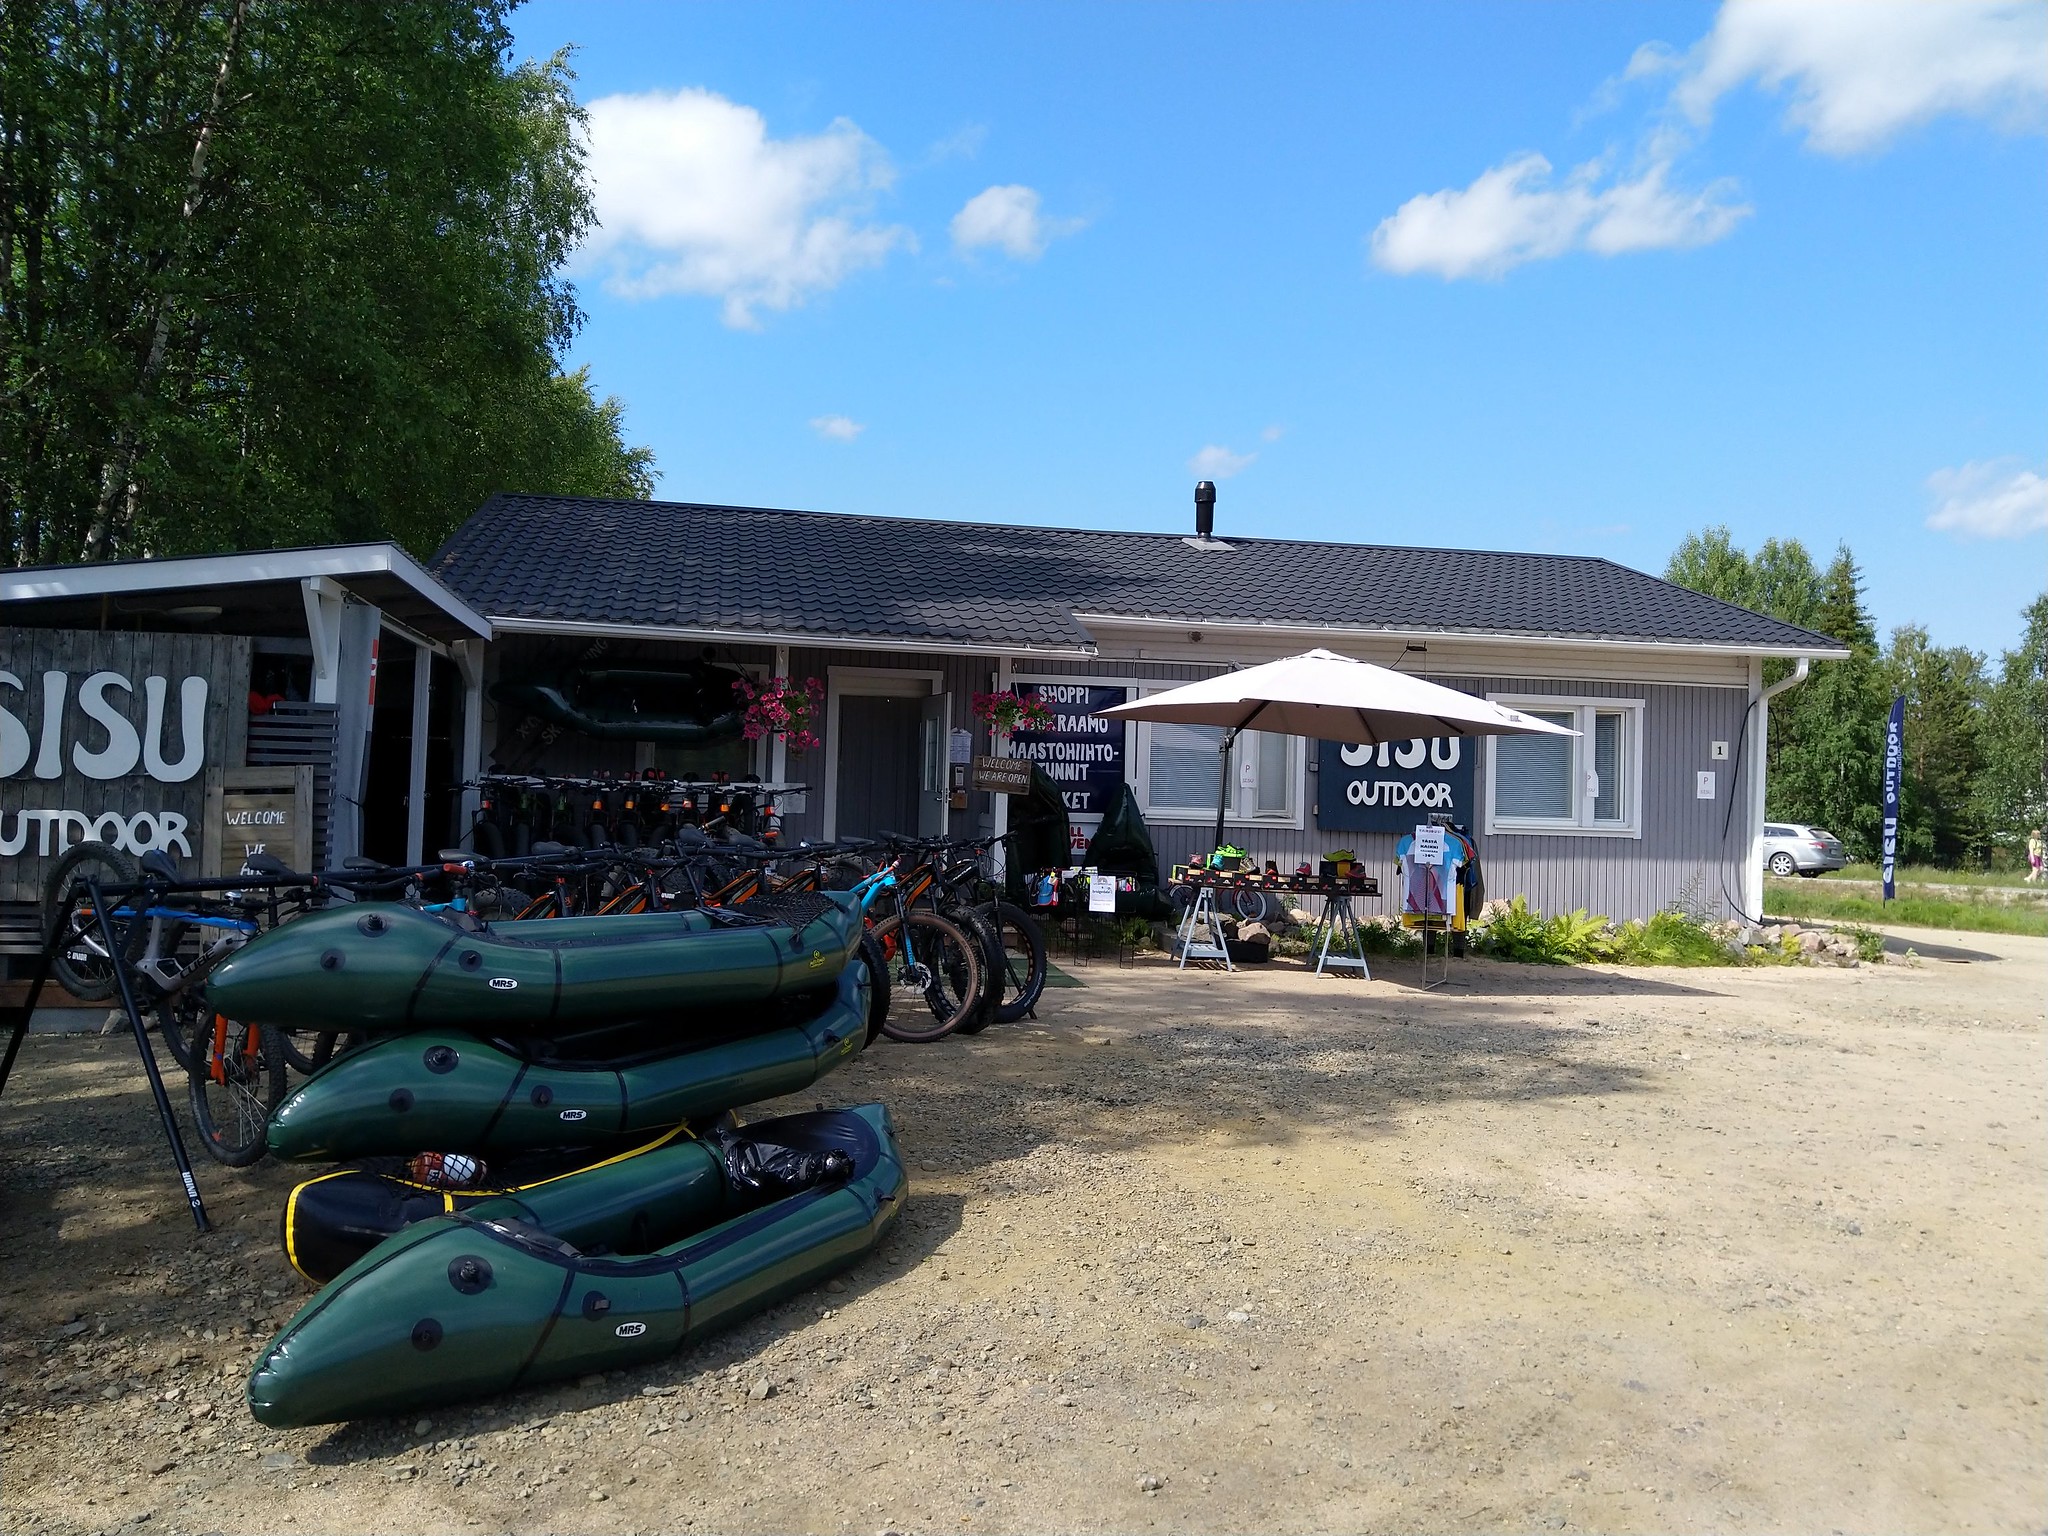 Pack Rafting with Sisu Outdoor, Ylläs